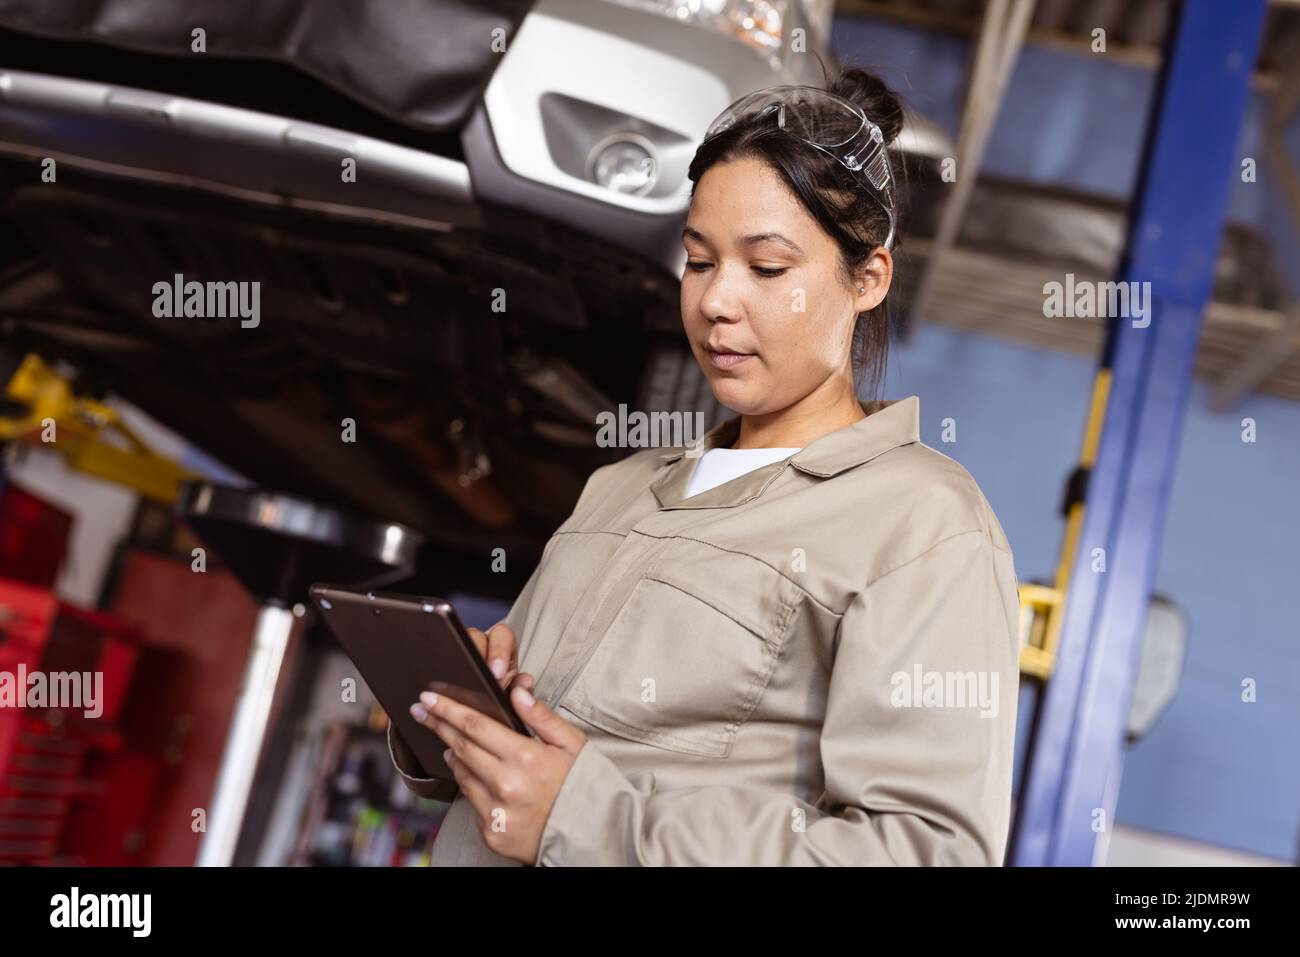 Mid adult asian female engineer using digital tablet while repairing car in workshop, copy space Stock Photo